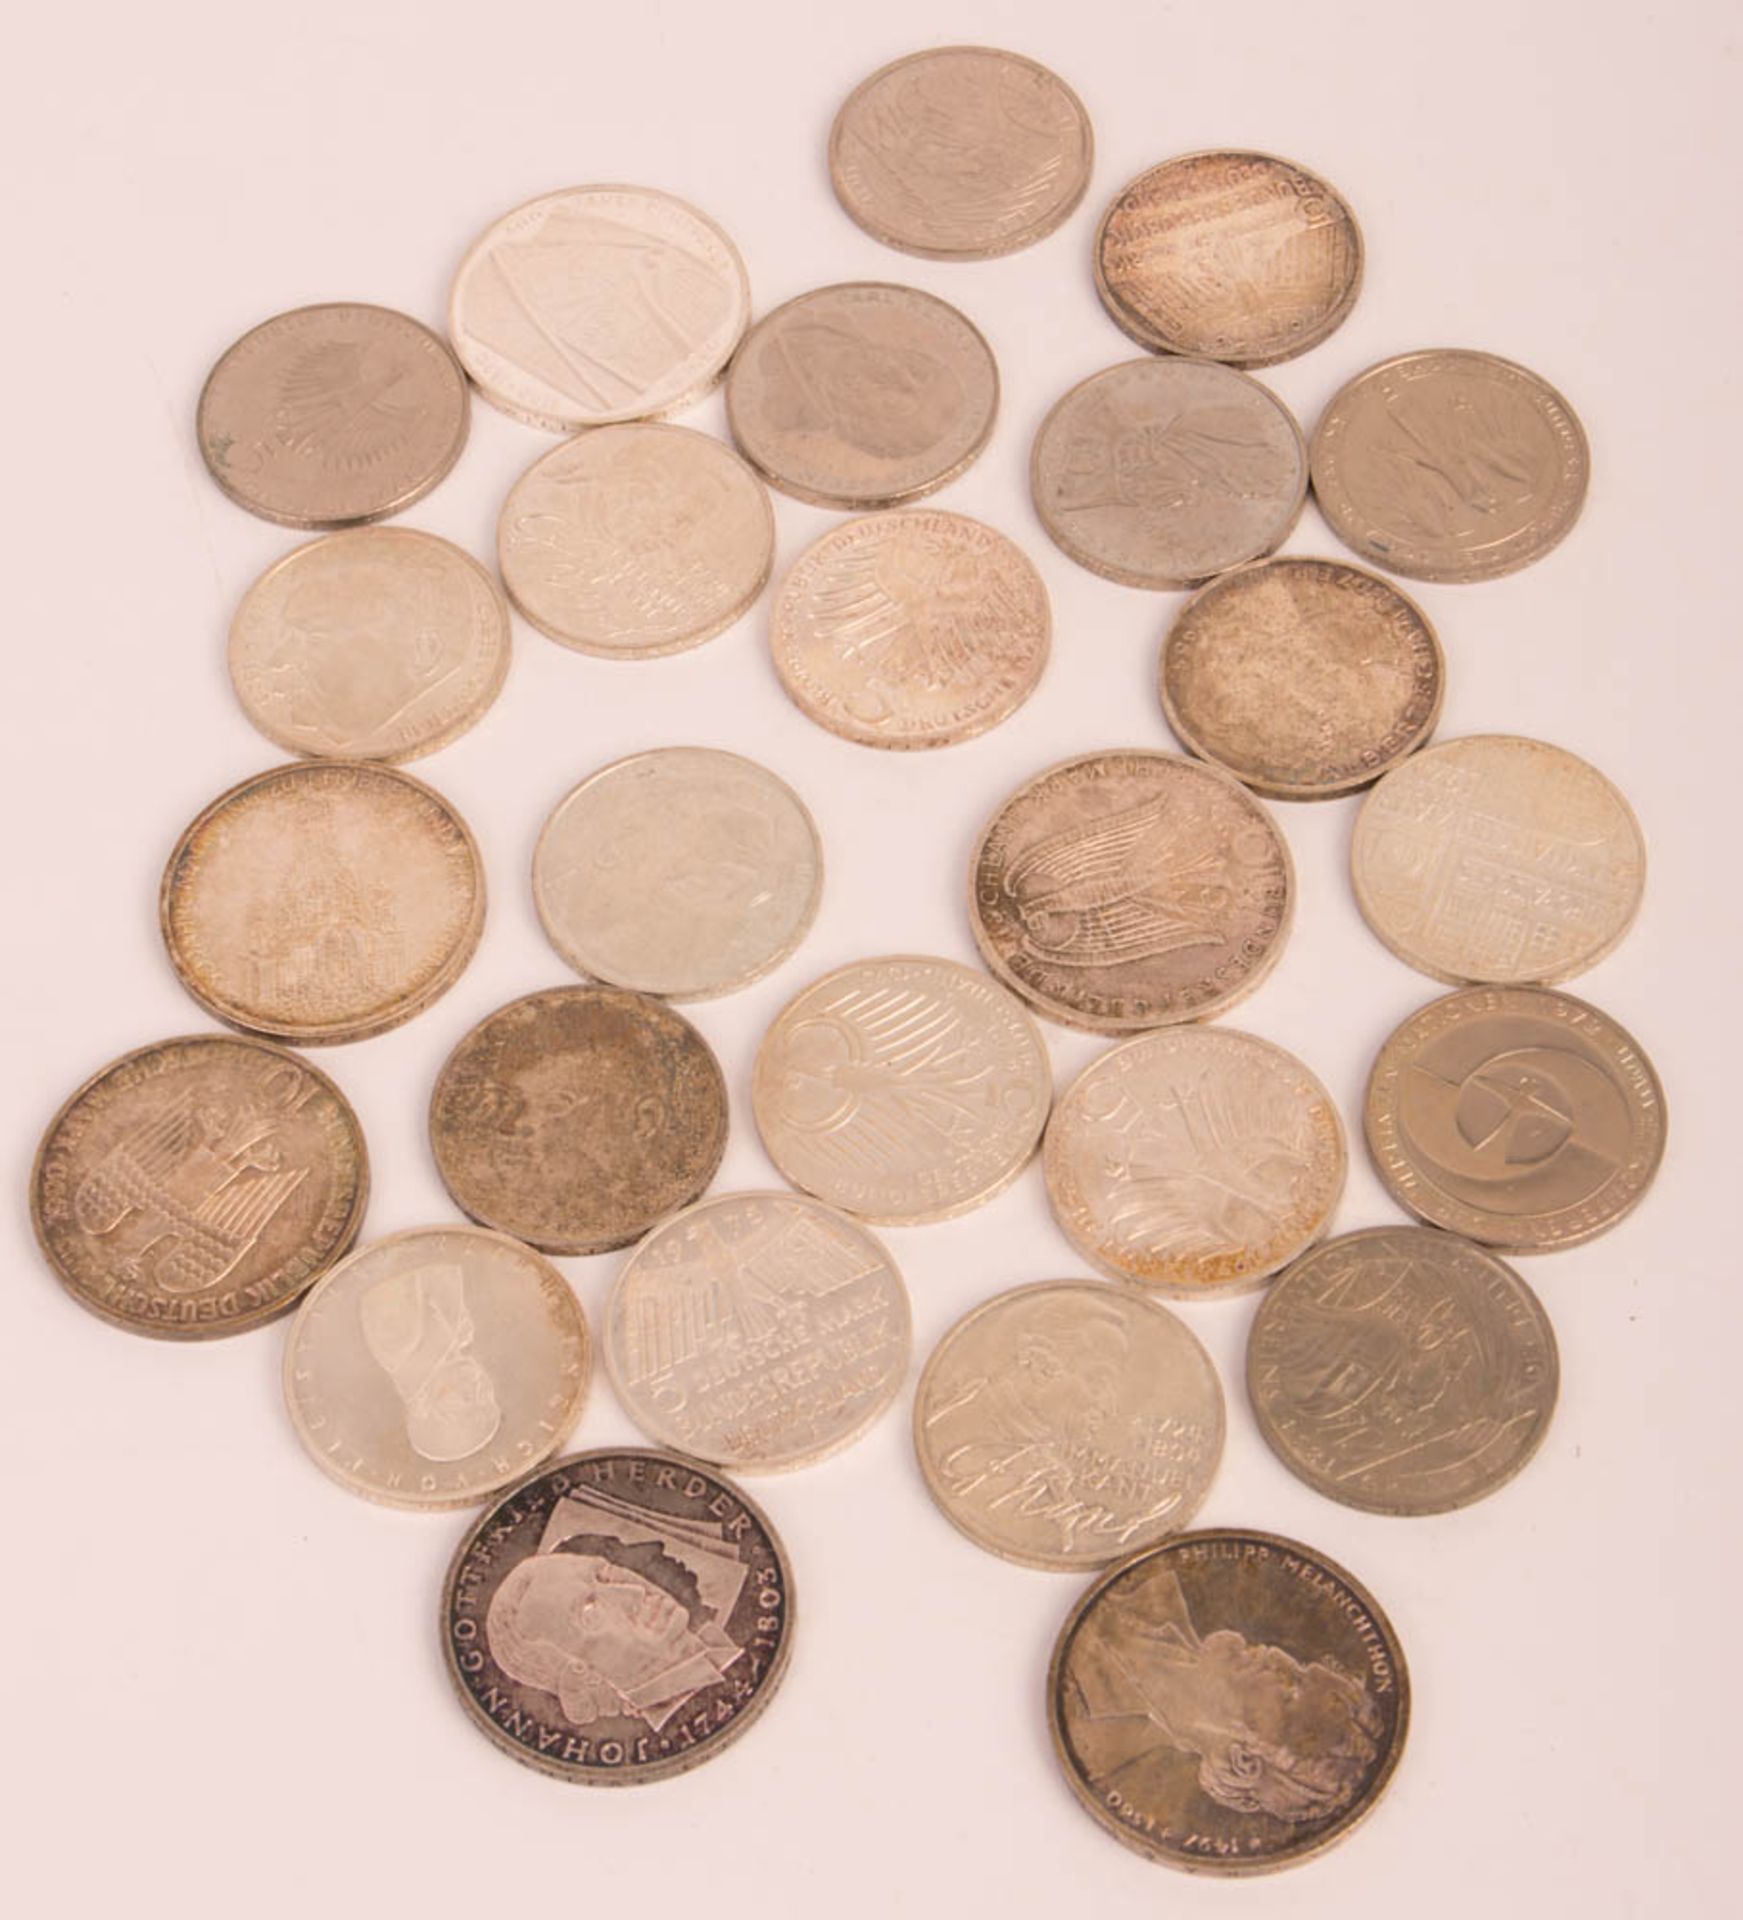 Convolut BRD commemorative coins. - Image 5 of 5